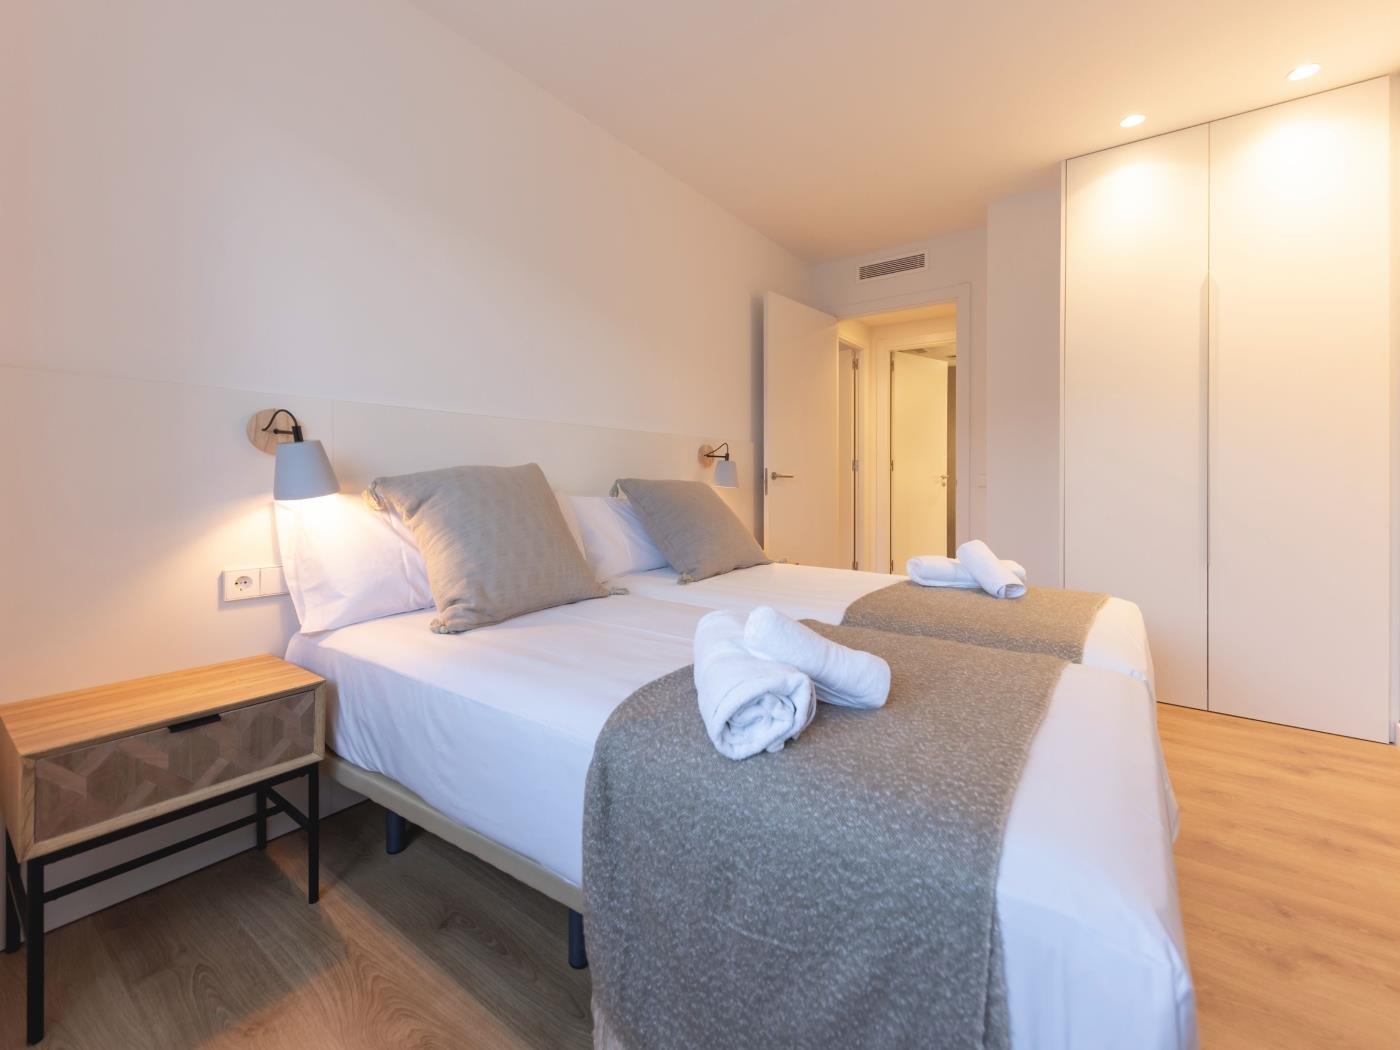 Bravissimo Afra, 2-bedroom apartment in Girona